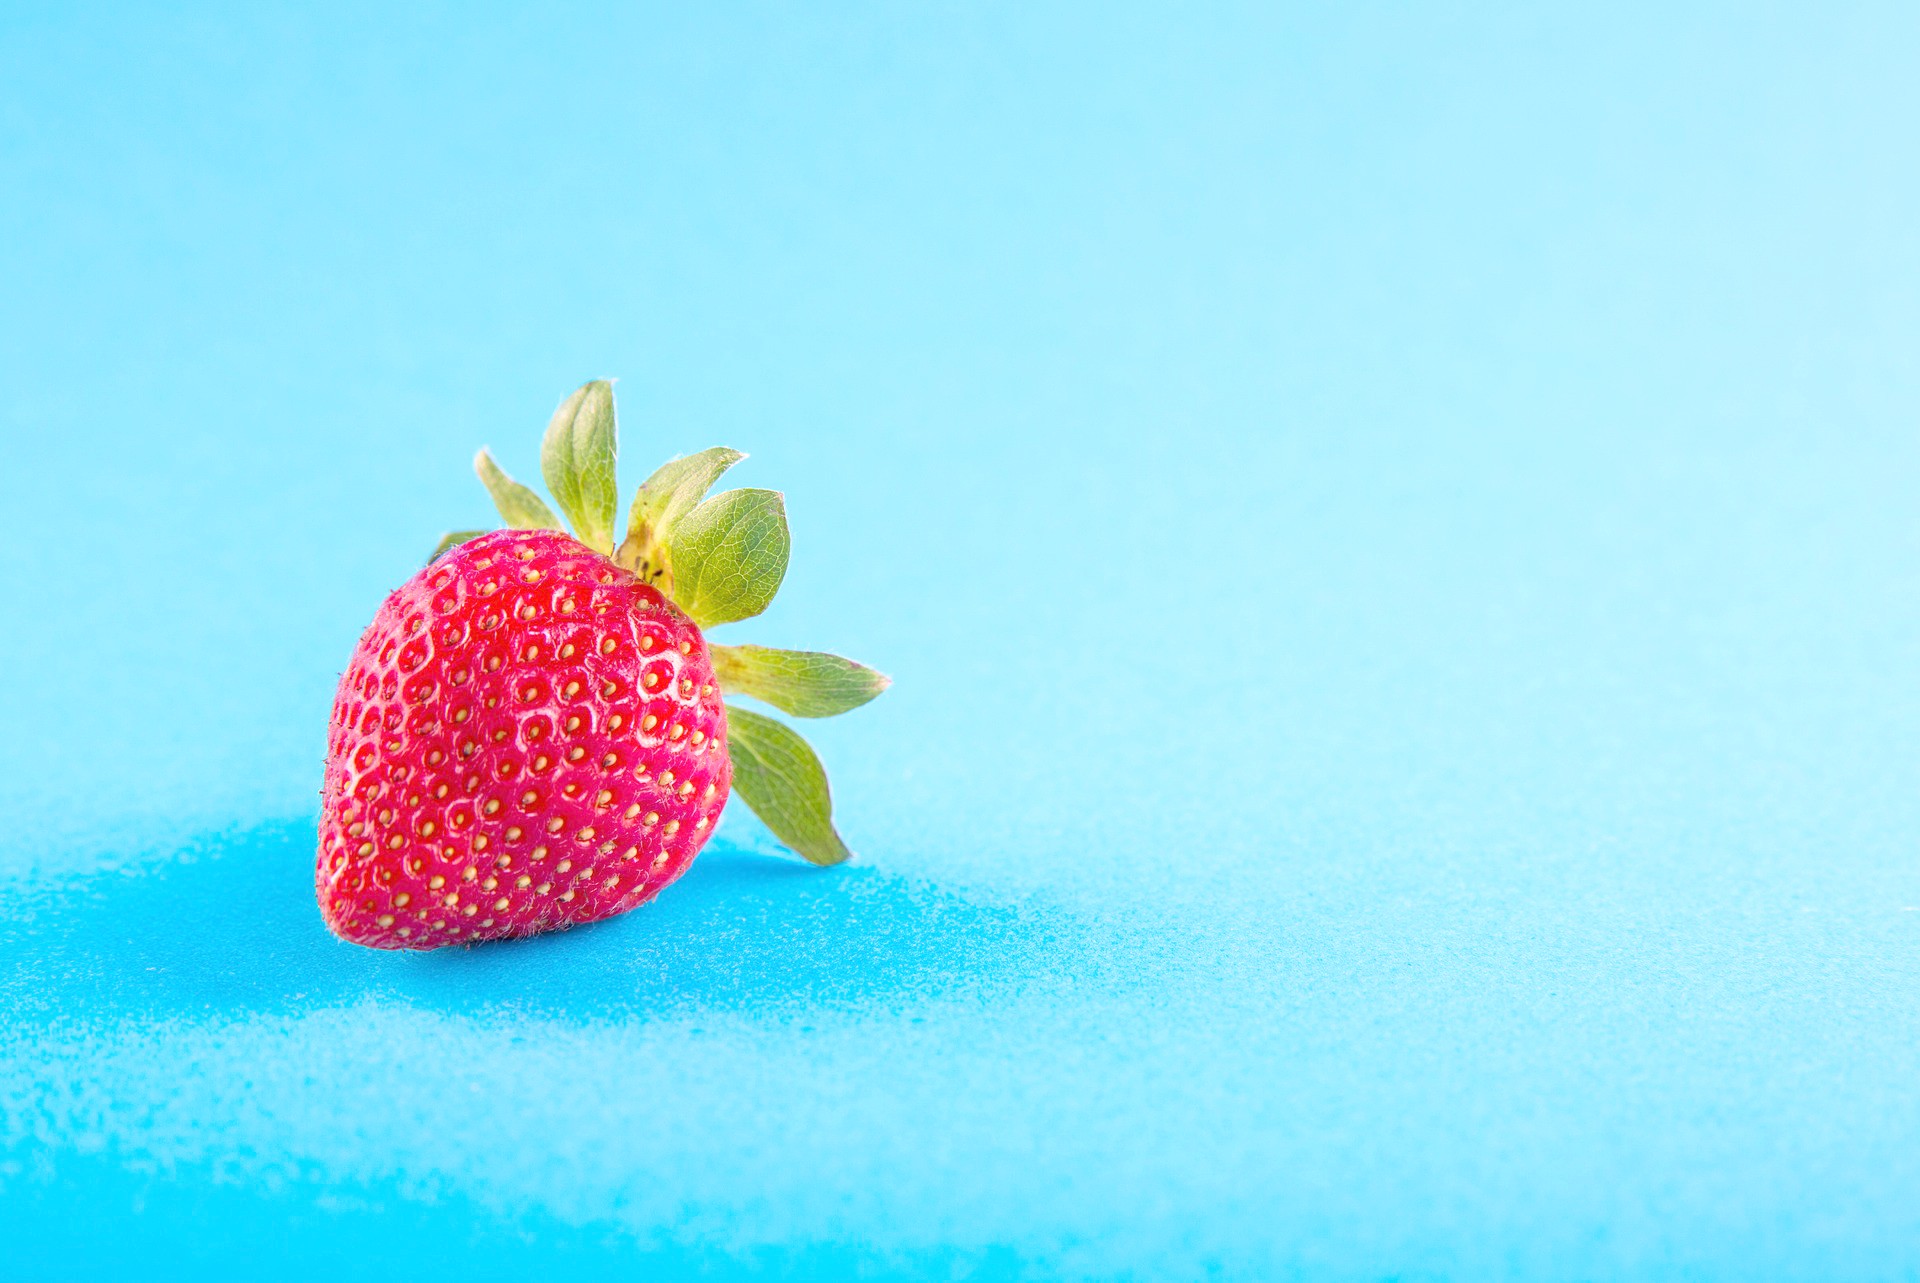 <img src="strawberry.jpg" alt="strawberry on blue background"/> 